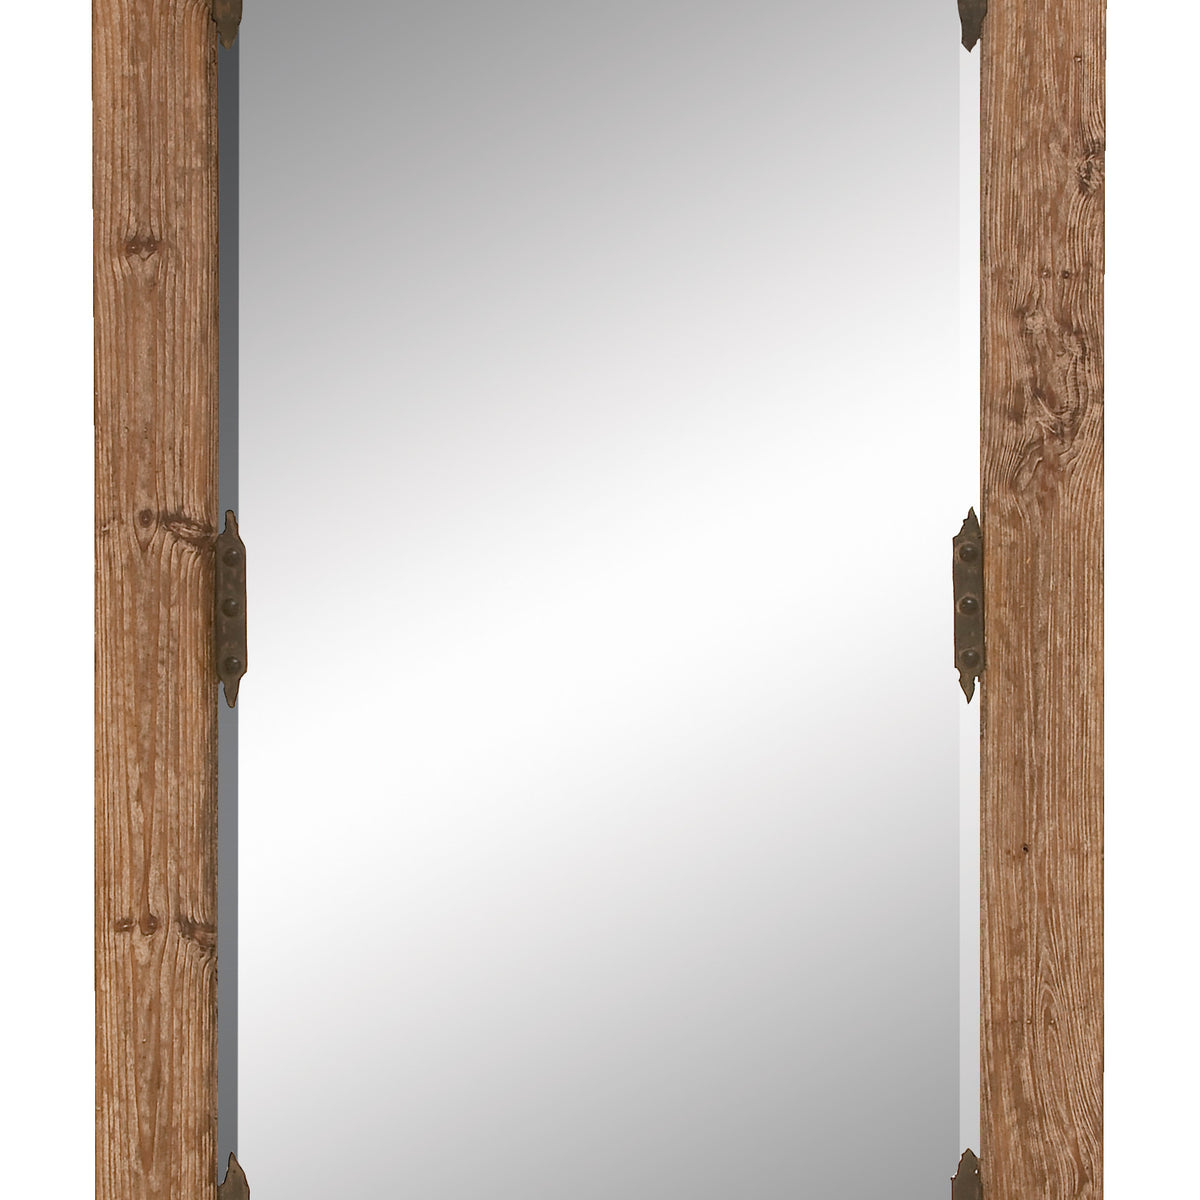 Espejo marco madera